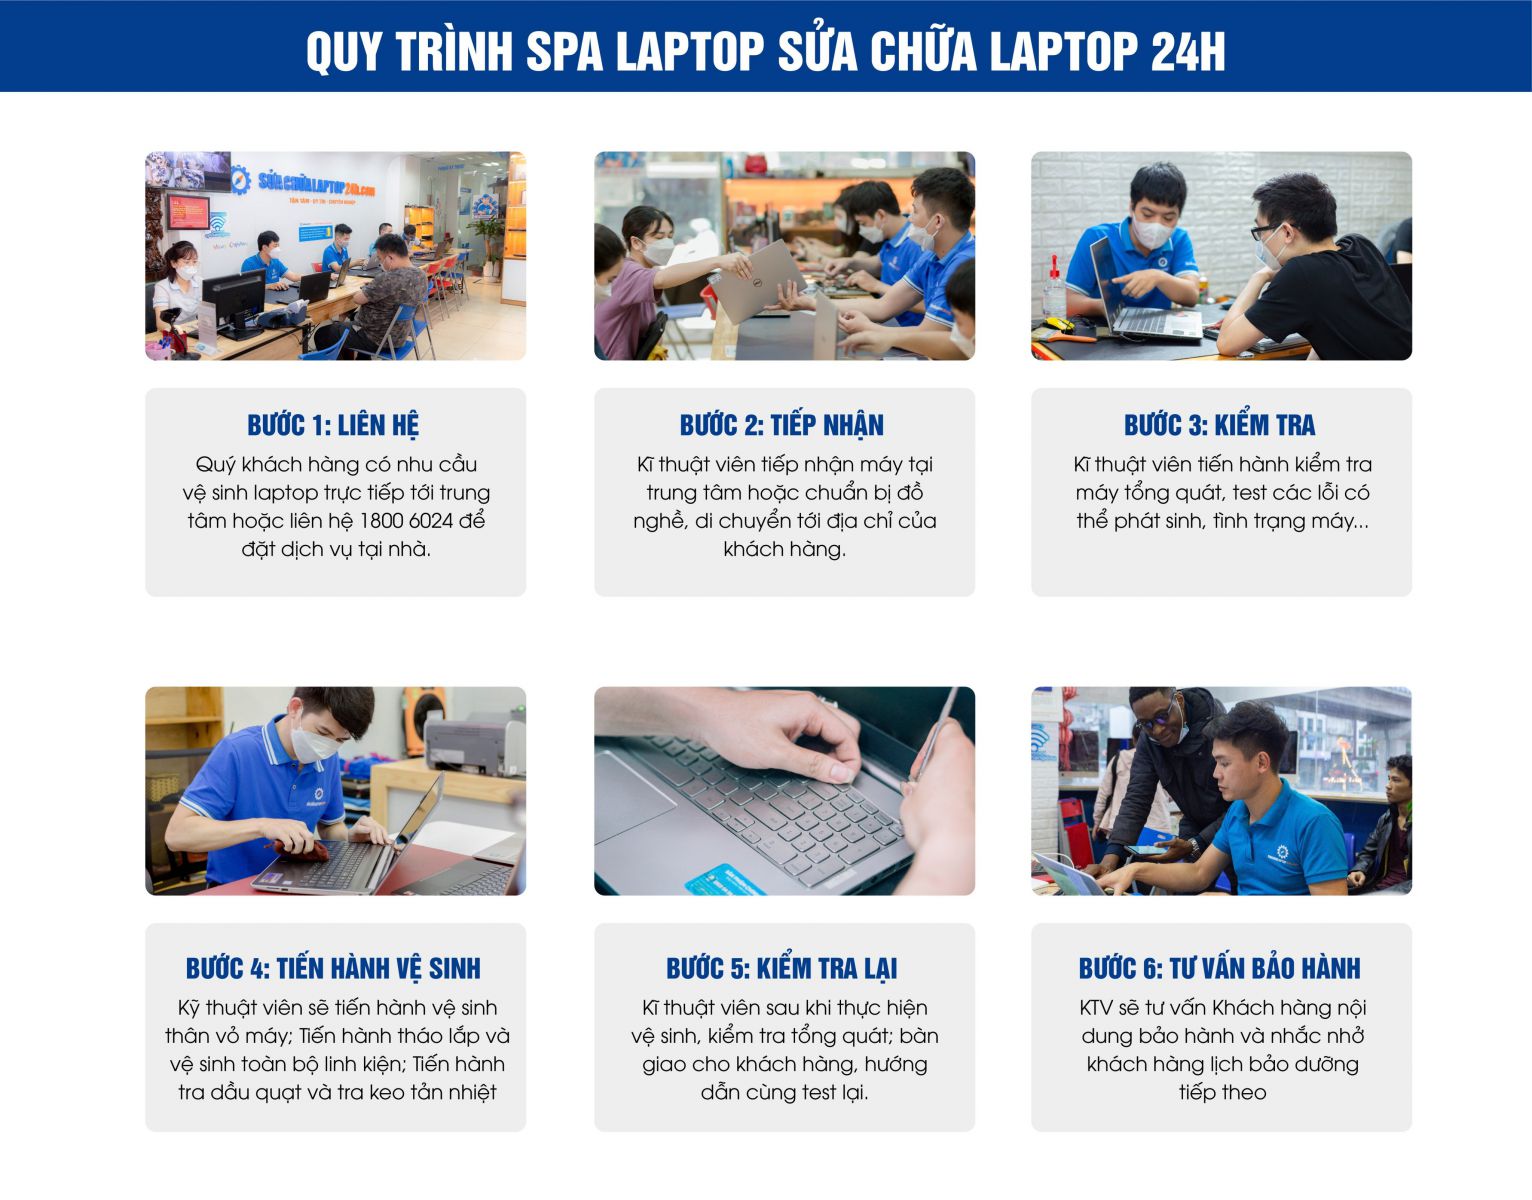 Quy trình Spa Laptop tại Sửa chữa Laptop 24h